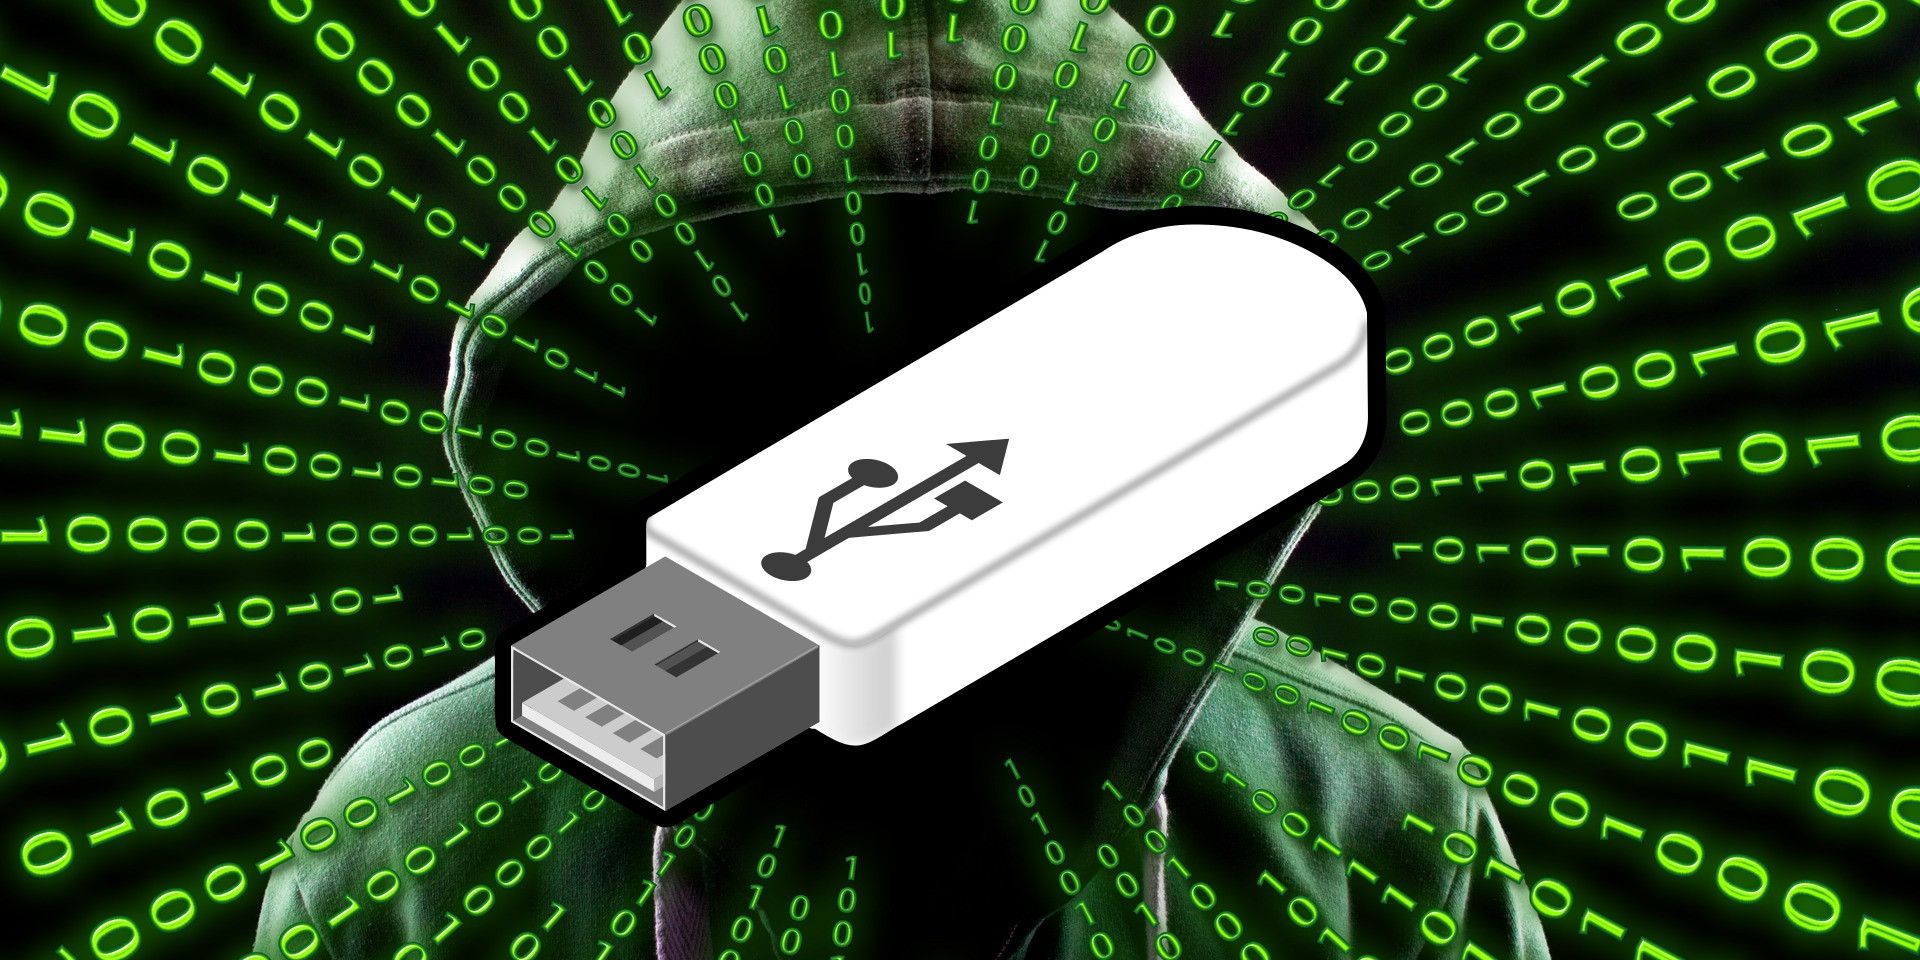 Hacker with USB flash drive